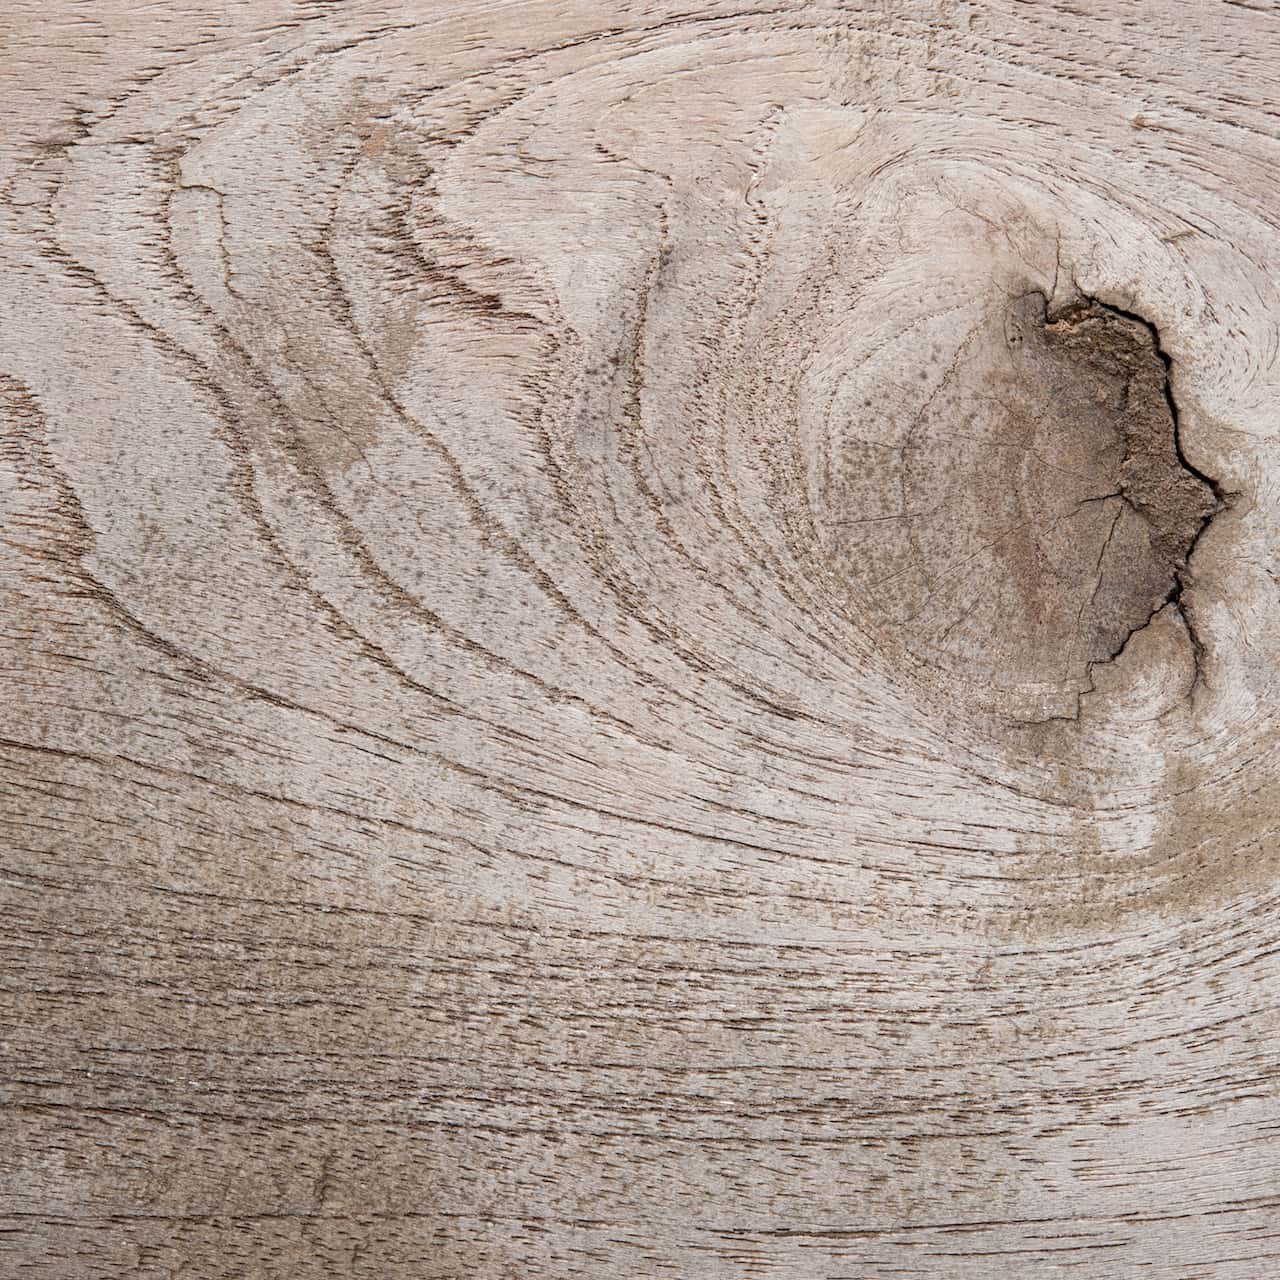 wood growth rings pvc wall design